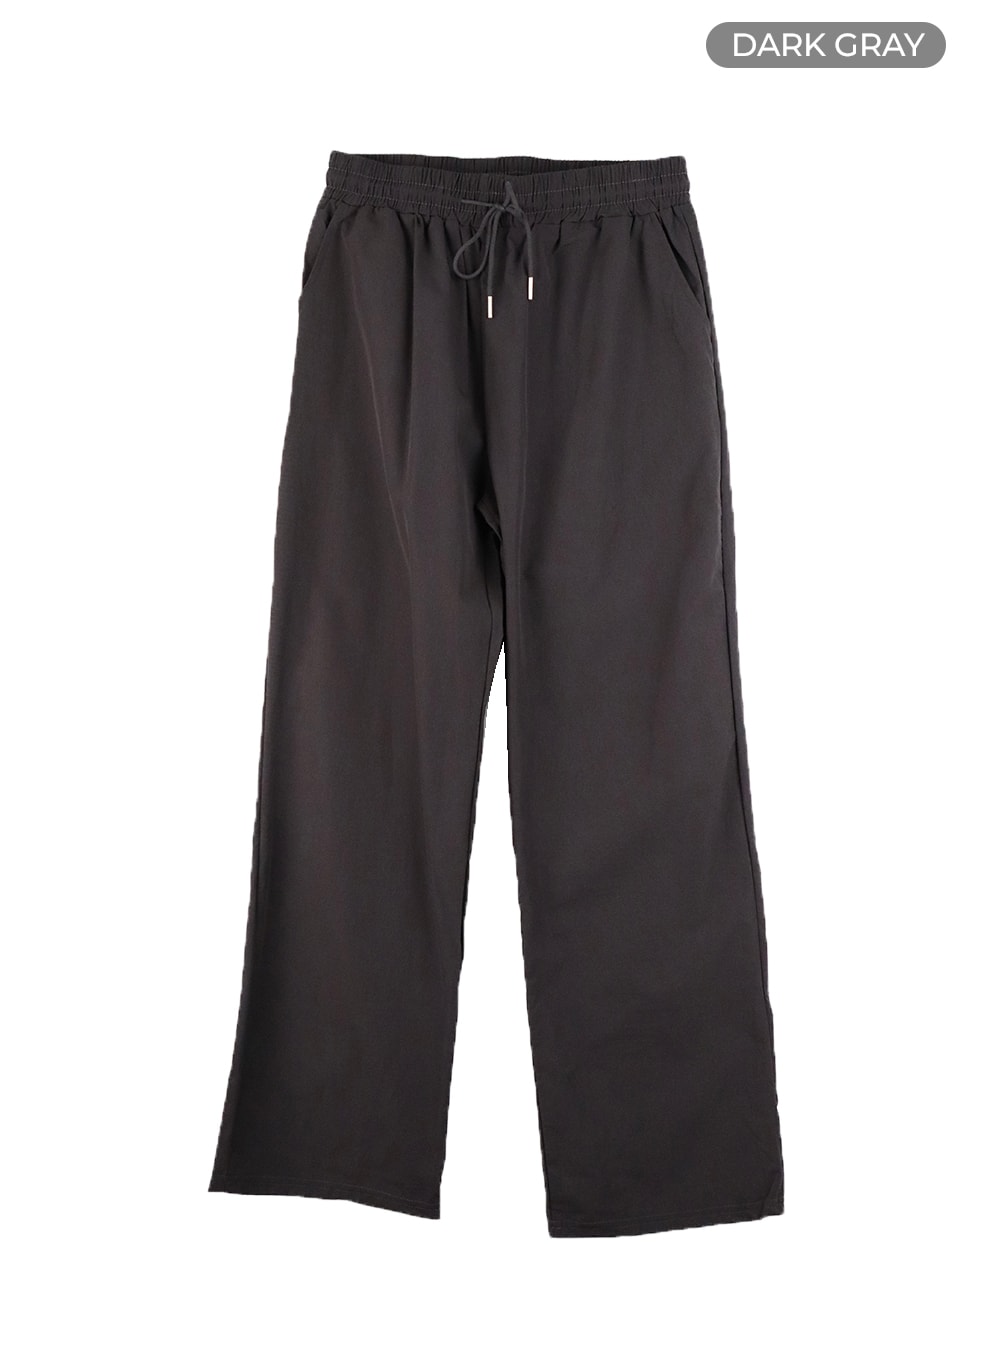 mens-simple-wide-leg-trousers-ia401 / Dark gray